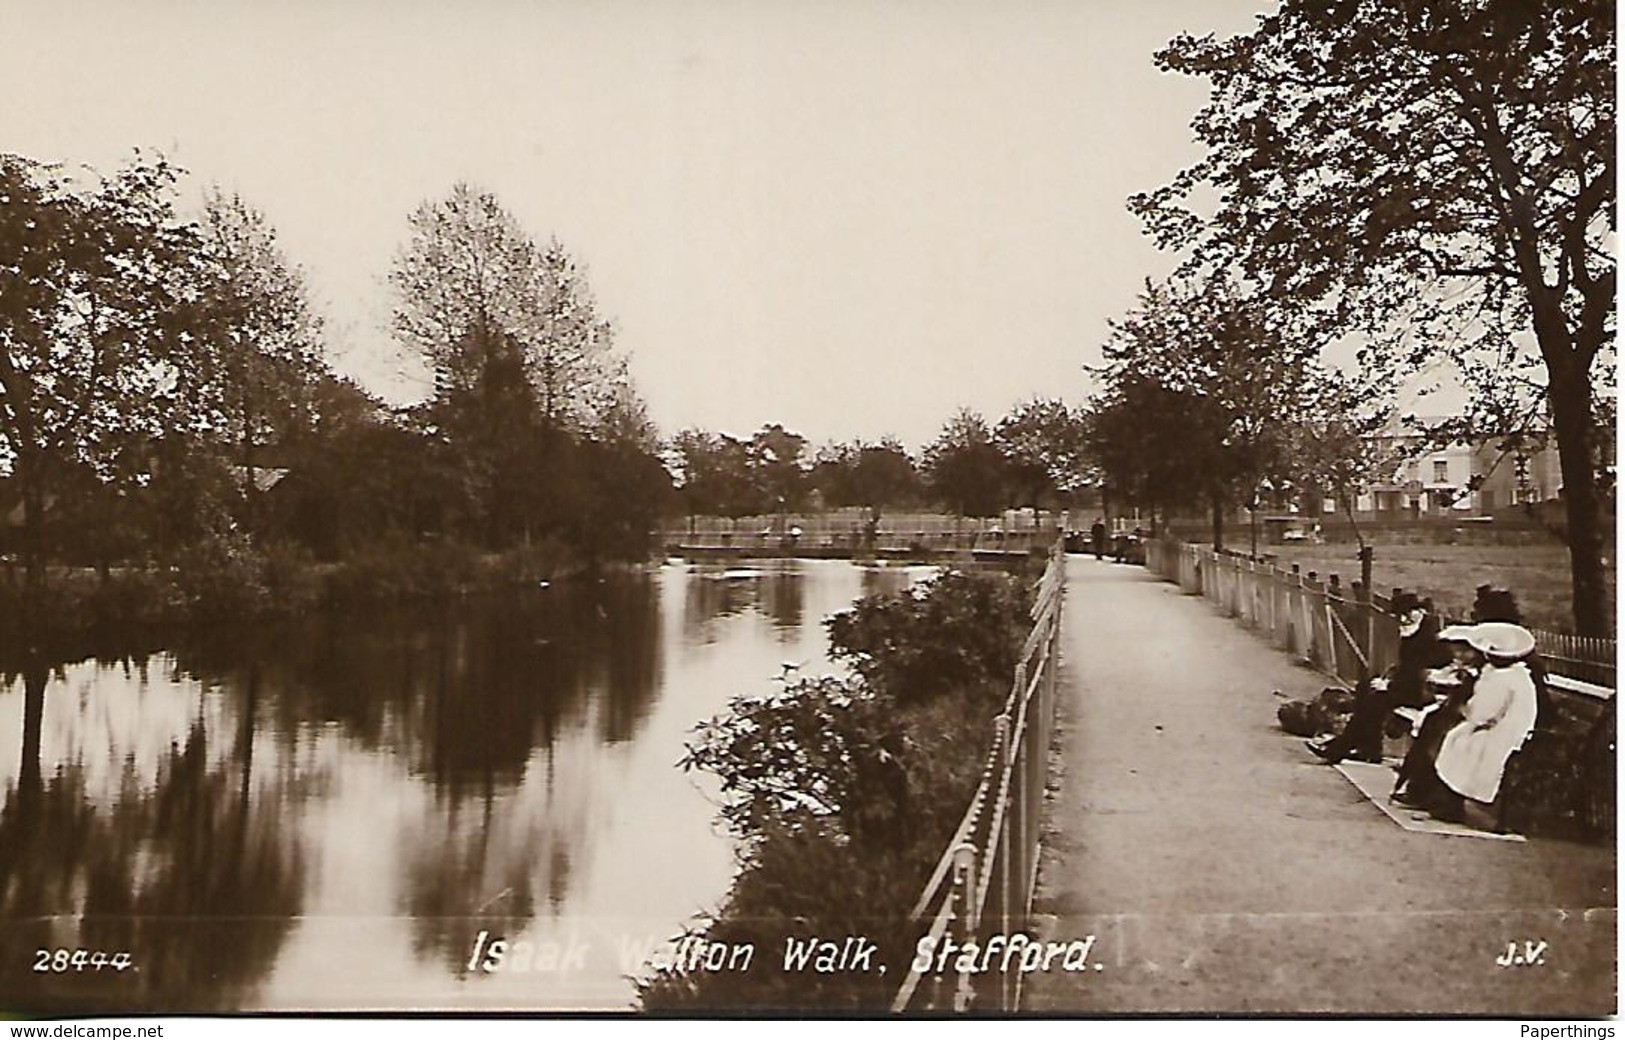 Photo Postcard, Isaak Walton Walk, Stafford, River, Houses, People. - Stoke-on-Trent